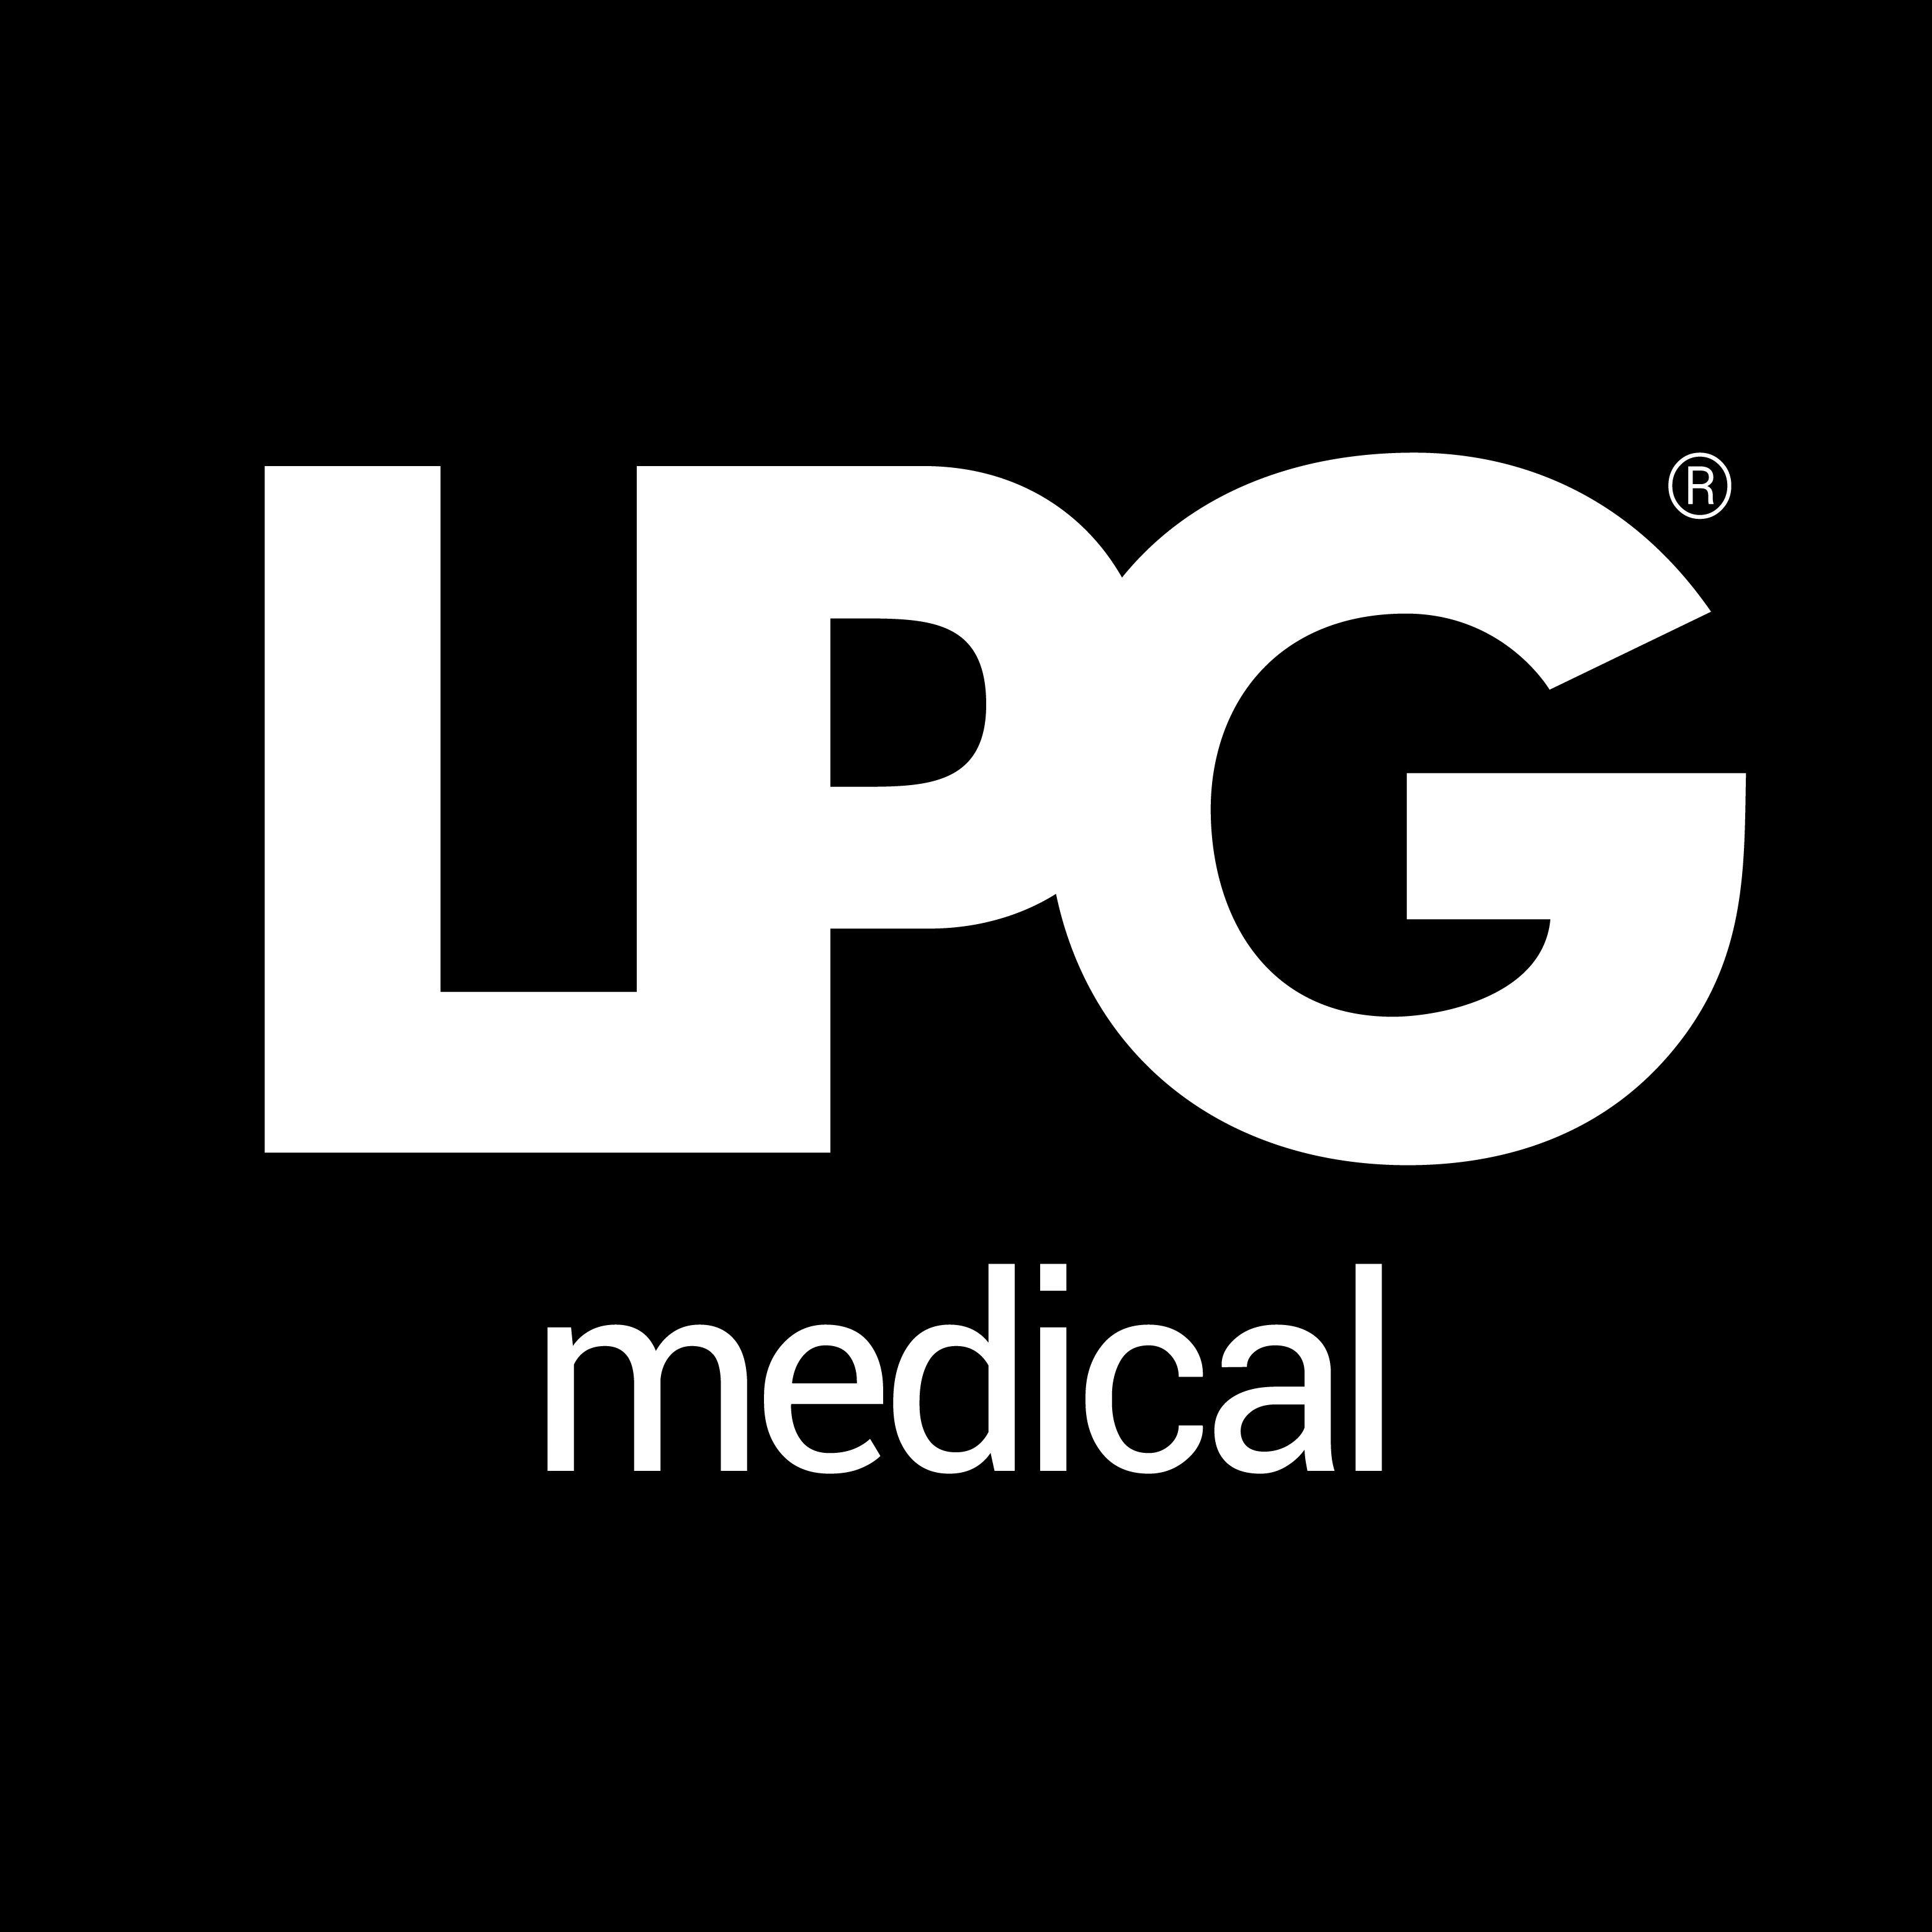 LPG Logo - LOGO LPG MEDICAL 2 LV Kaivokadun LV